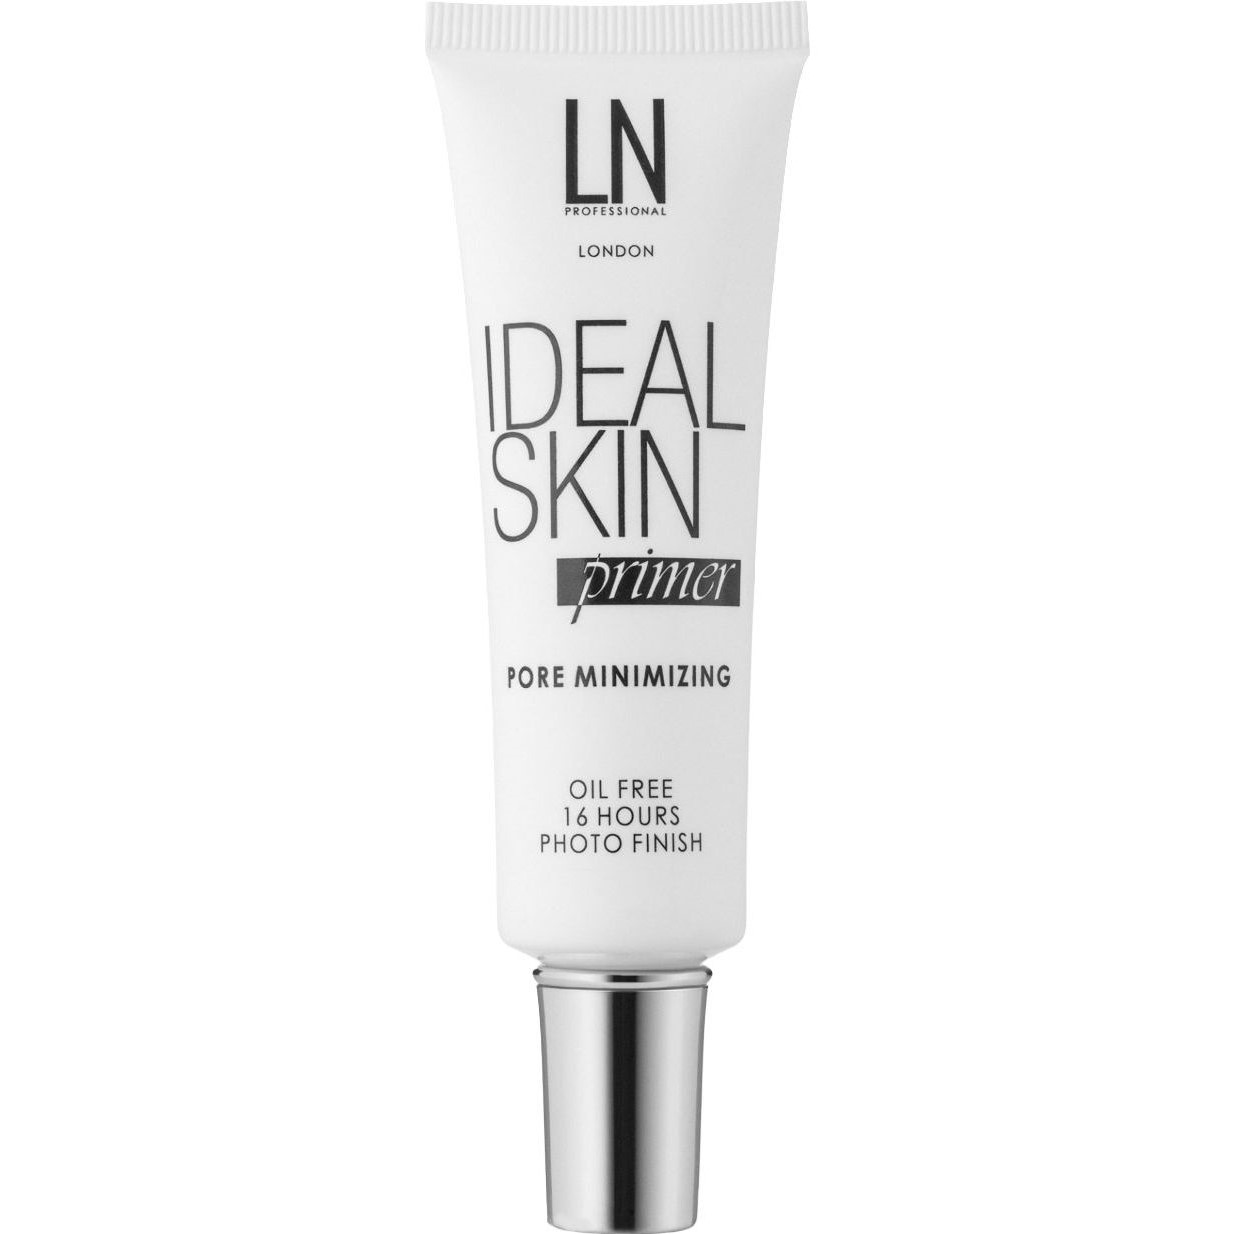 Основа під макіяж LN Professional Ideal Skin Primer 30 мл - фото 1